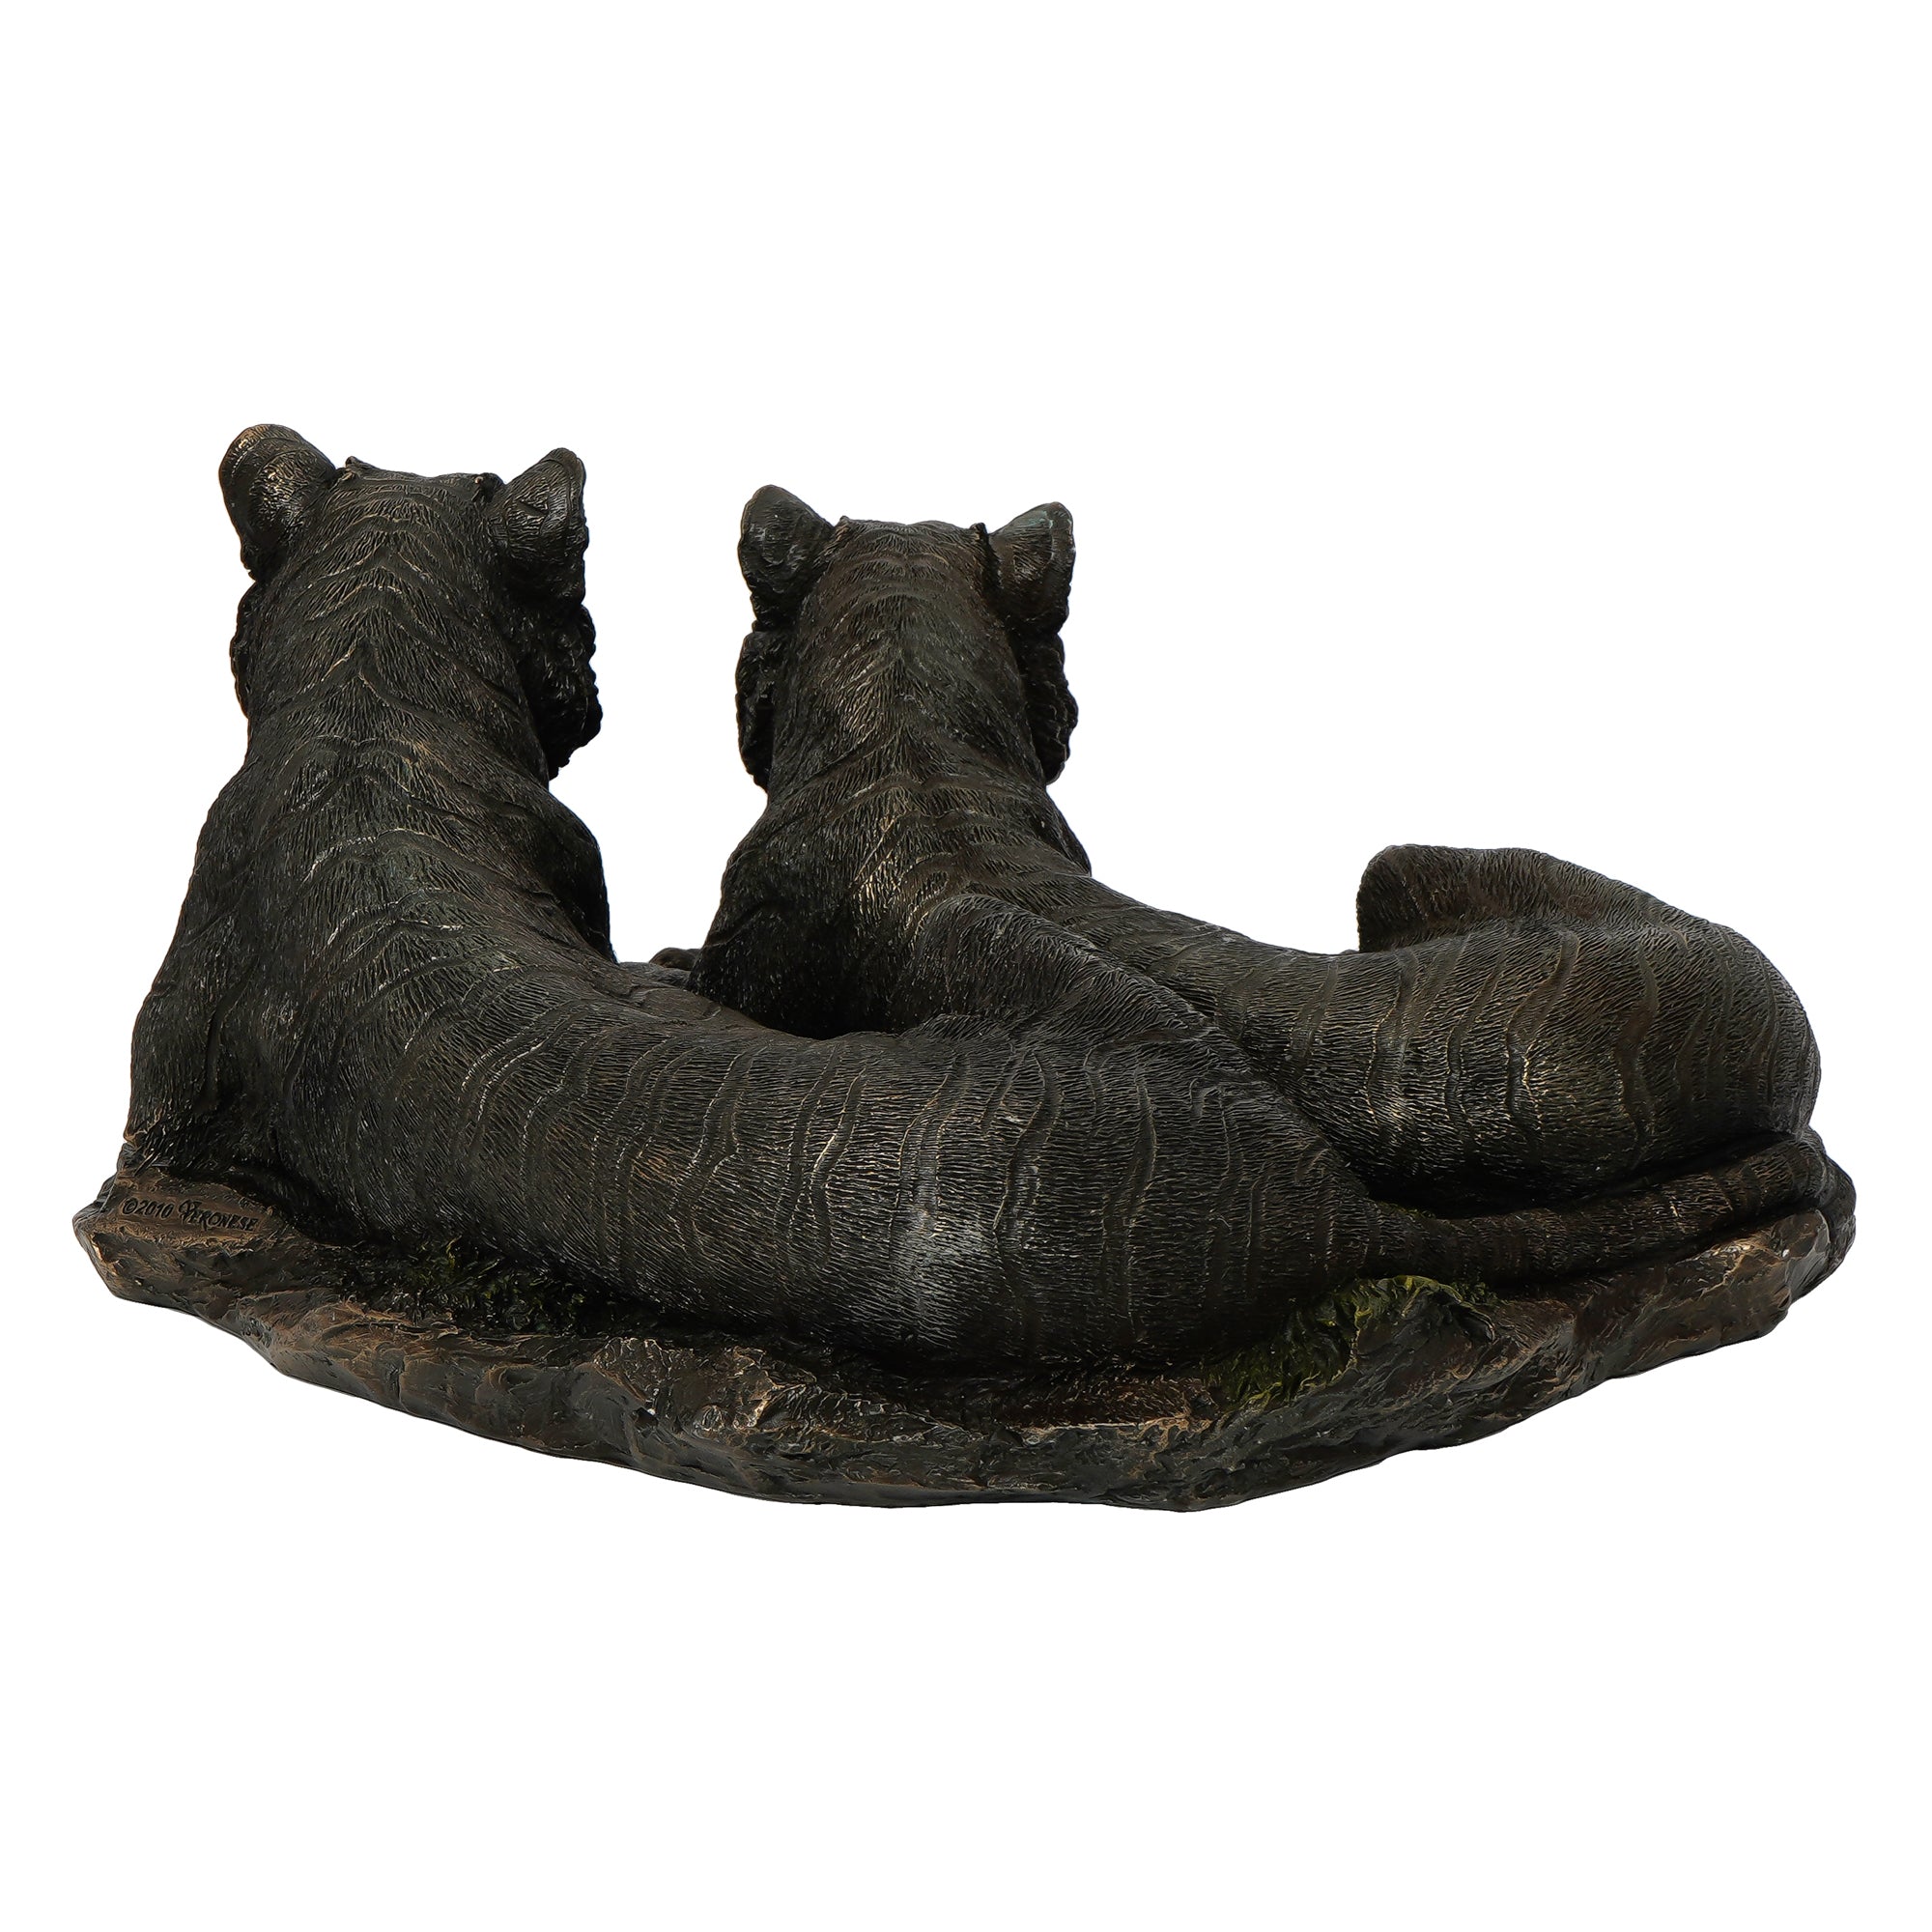 Polyresin and Bronze Decorative Black Tiger & Tigress Figurine 6